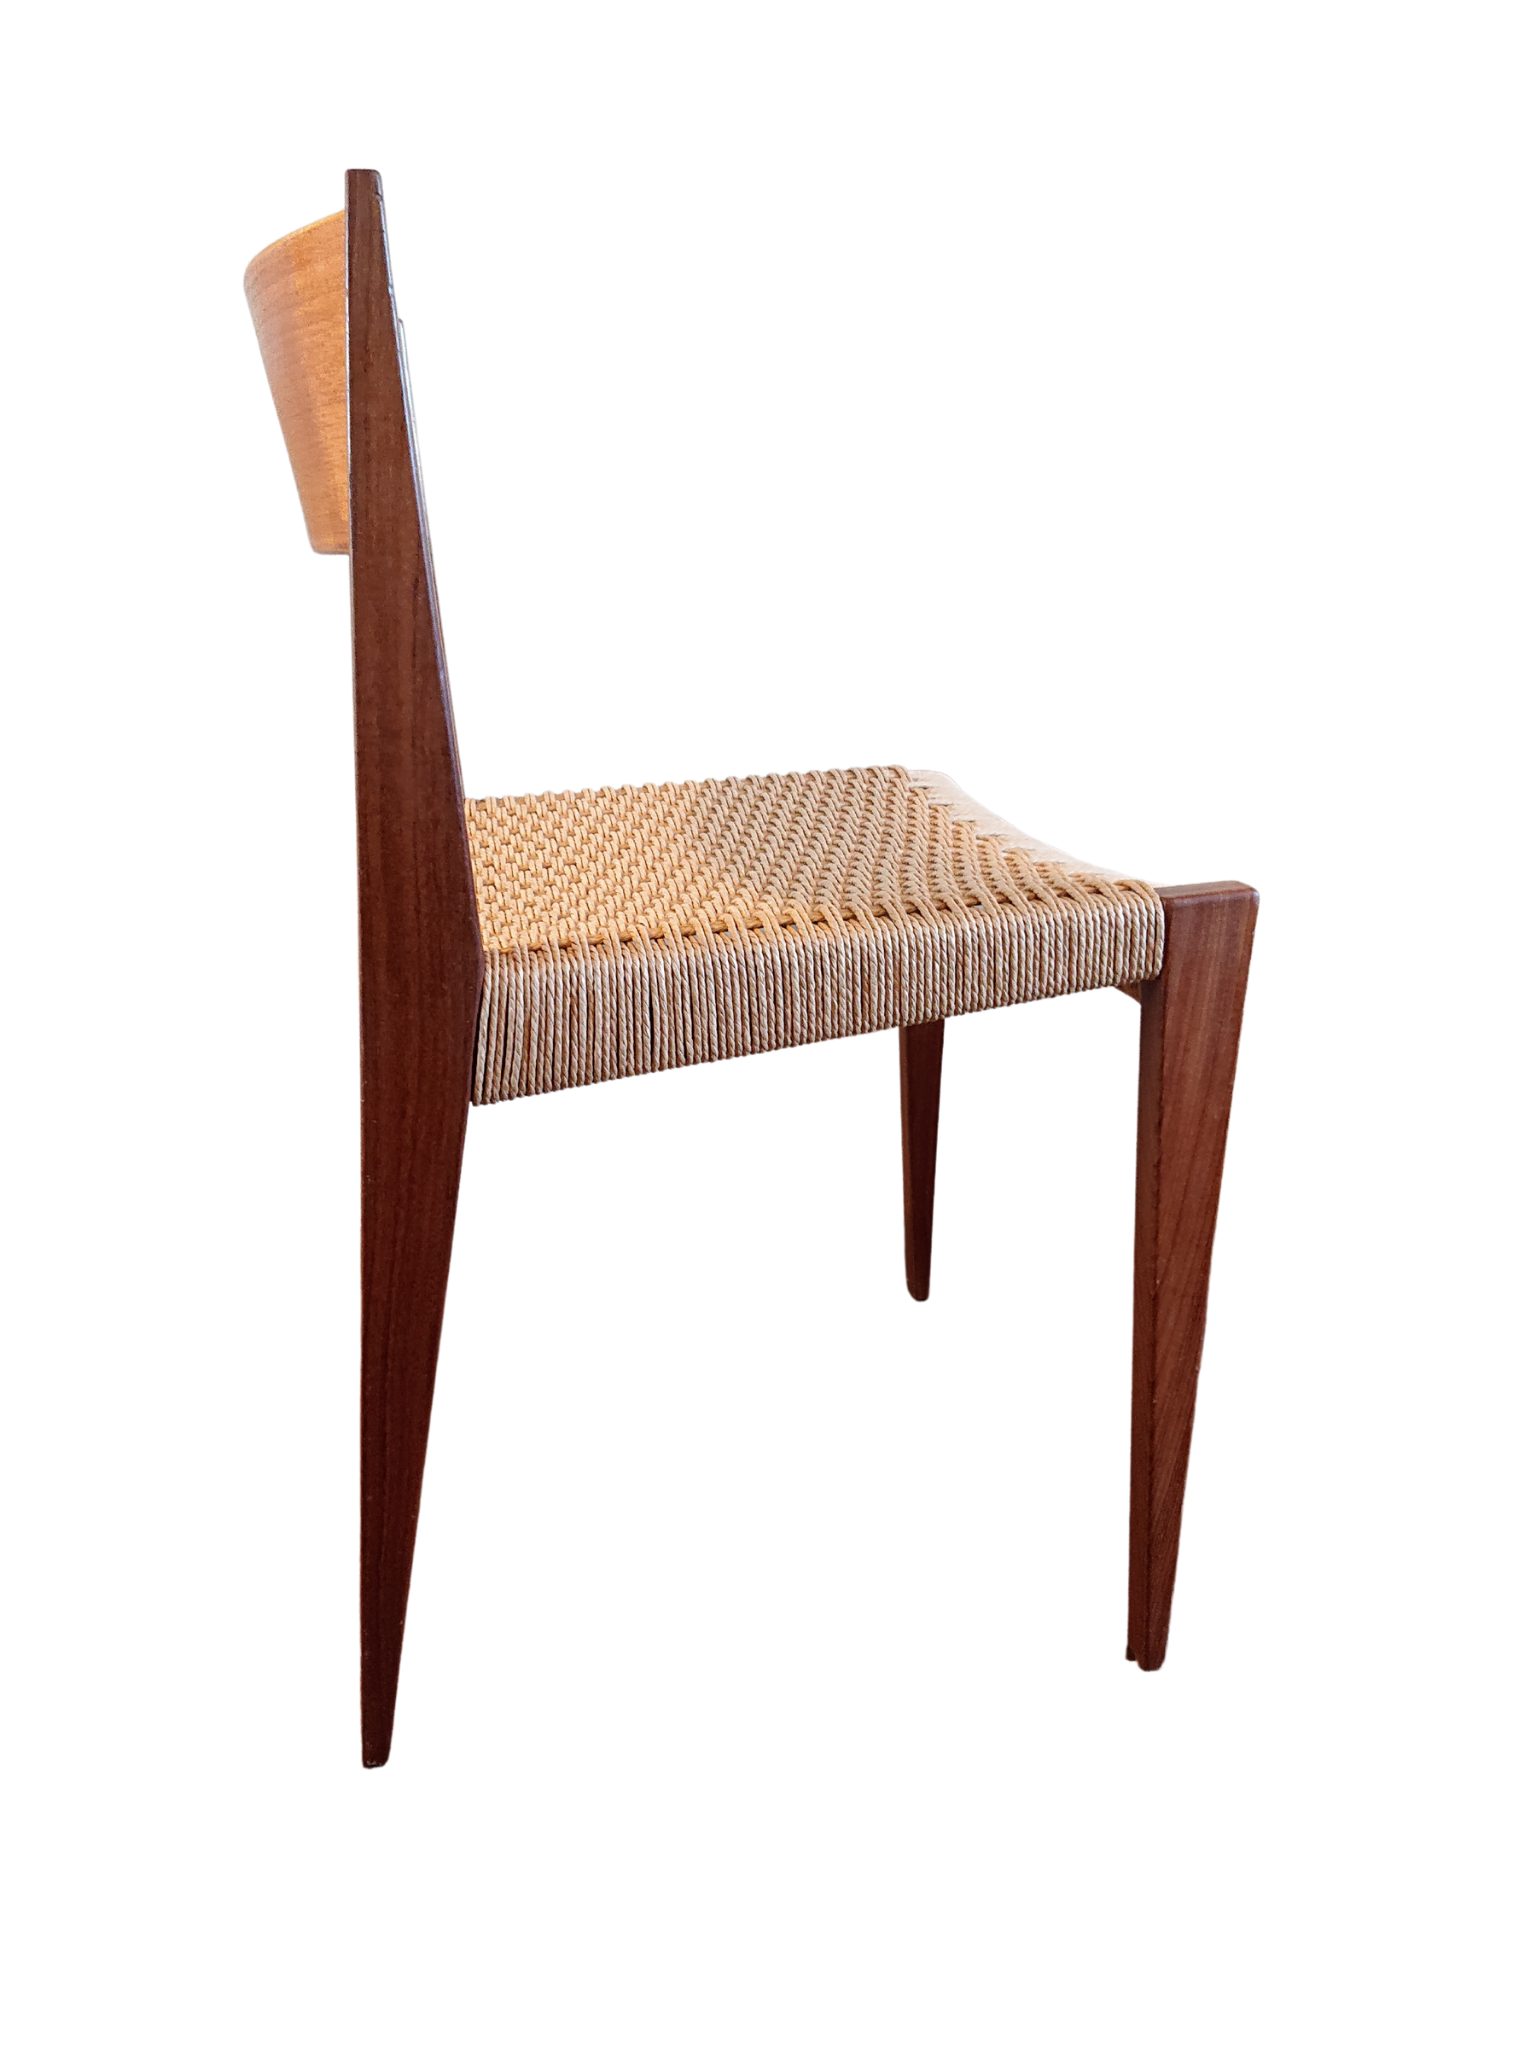 Poul Cadovius Teak & Paper Cord 'Pia' Chair